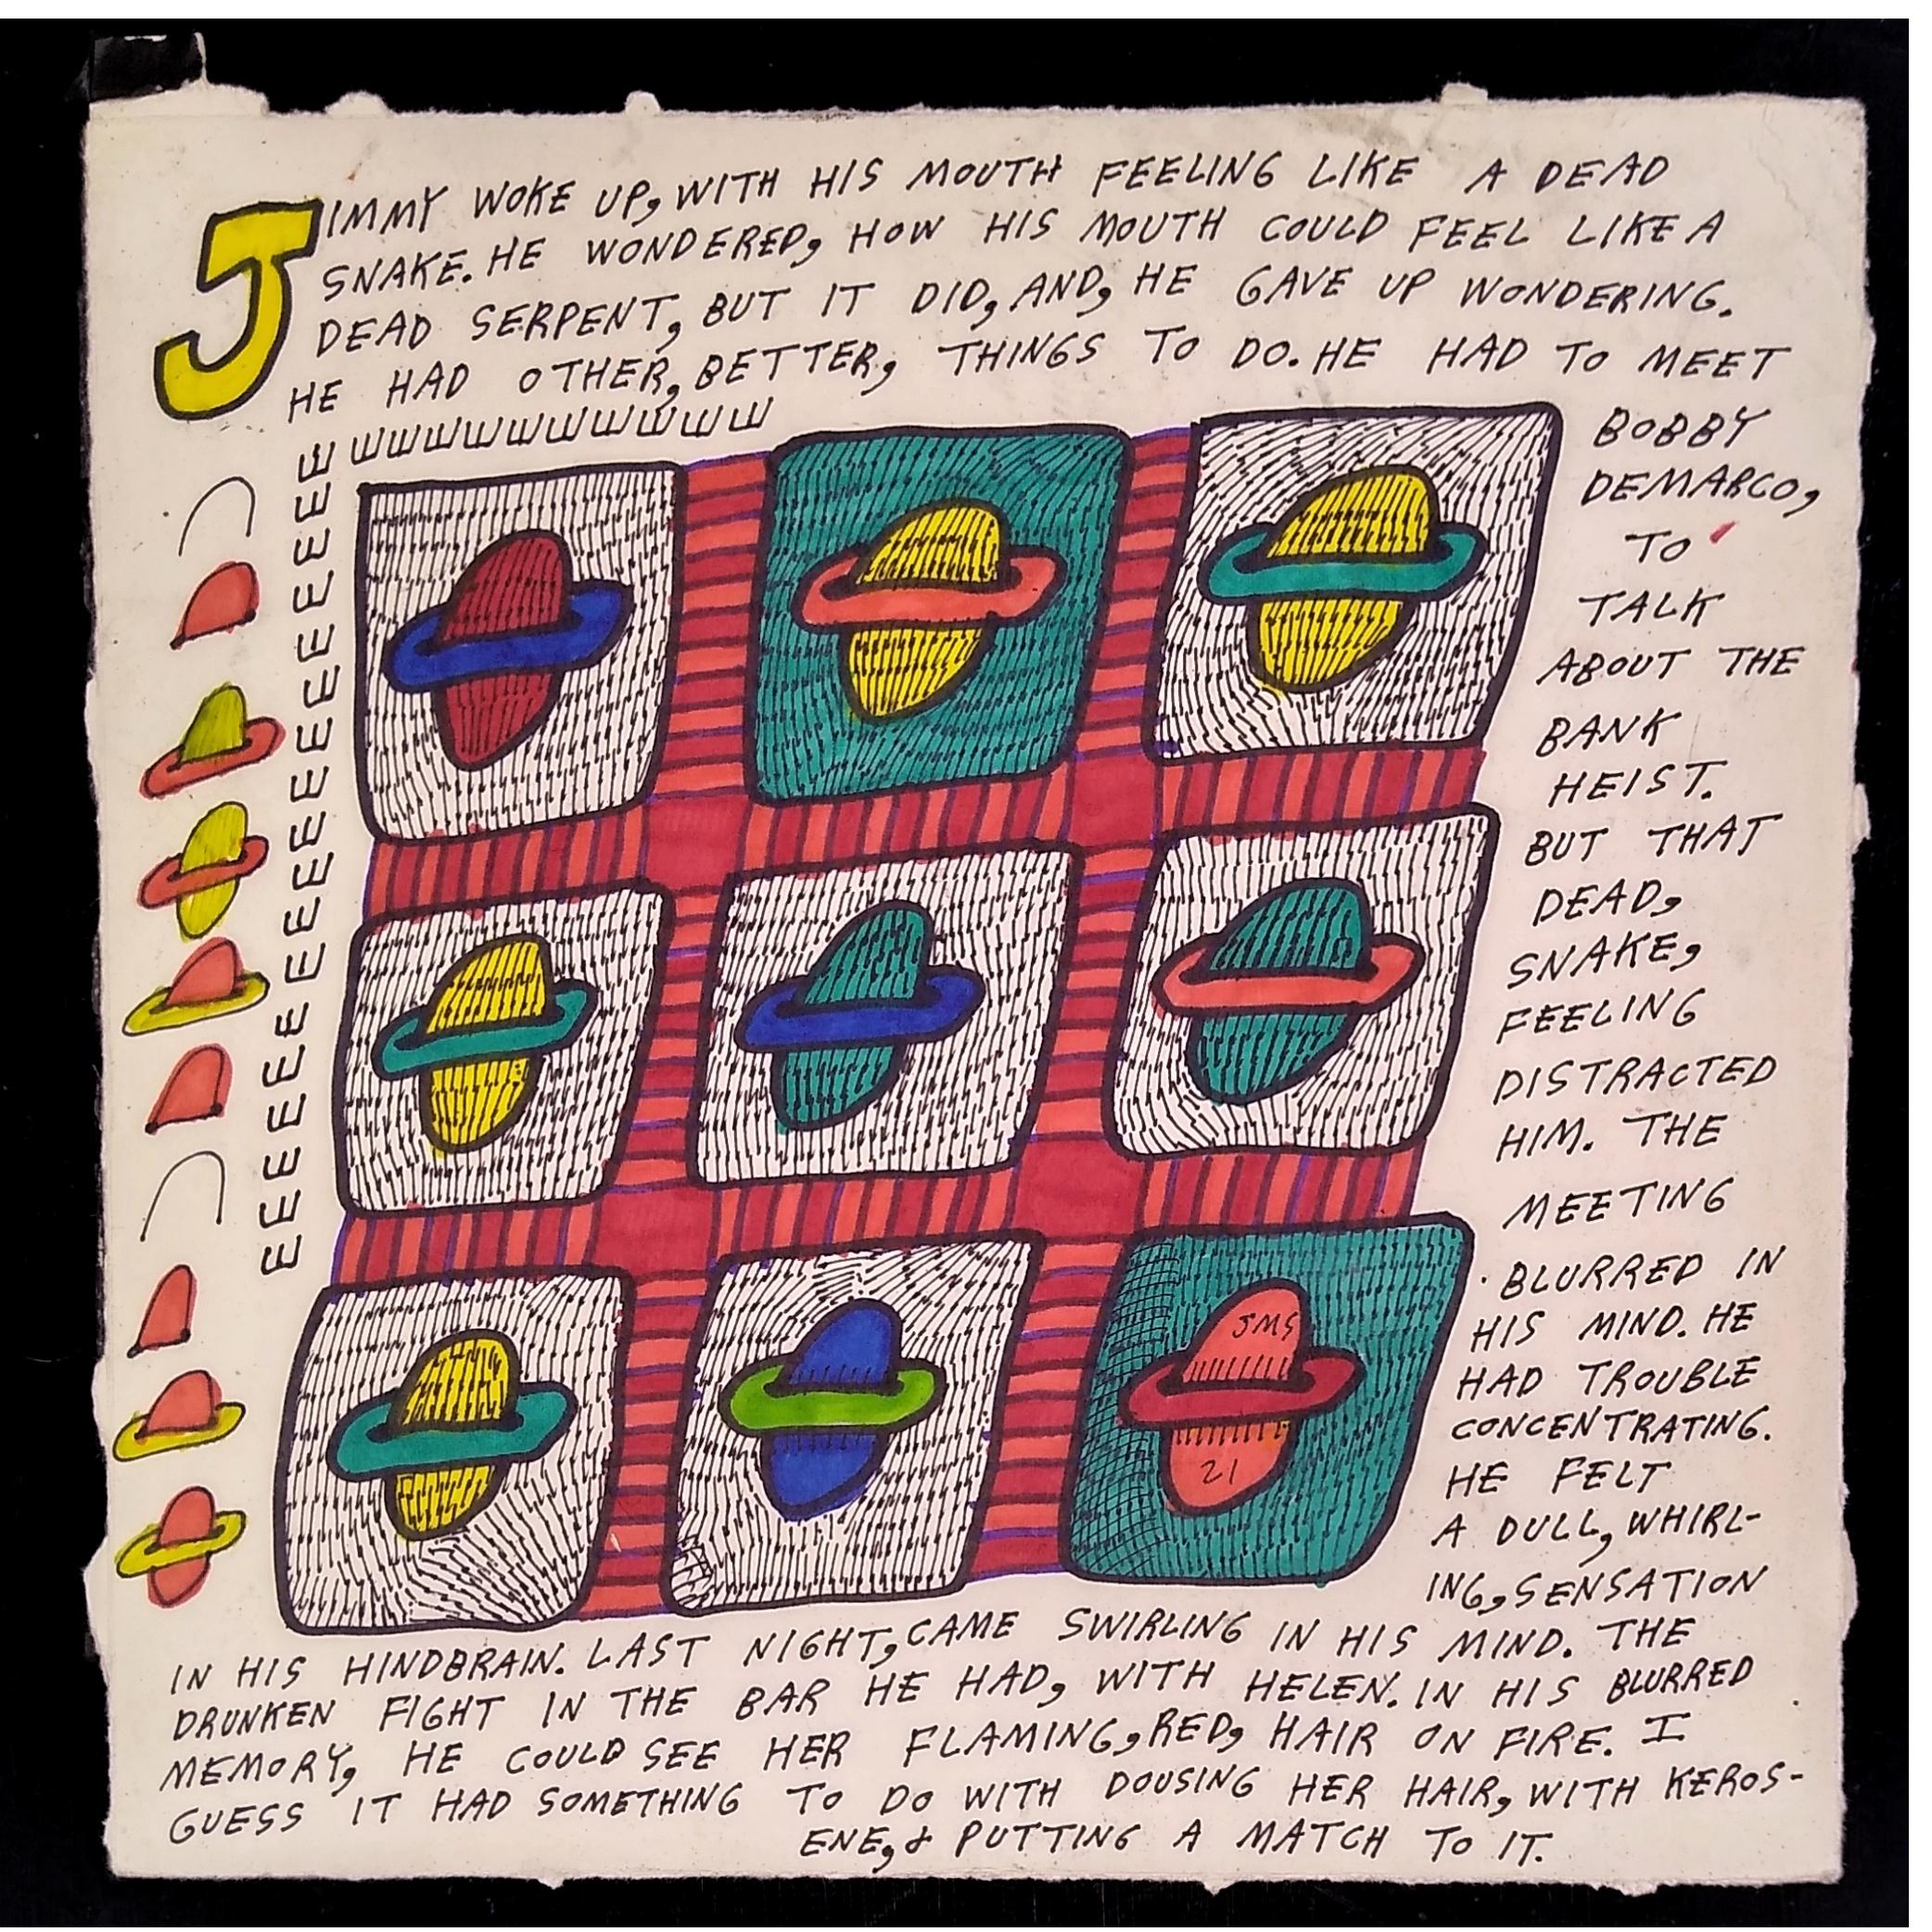 Jon Sarkin - "A dull, whirling sensation" - 12.5" x 12.5" - permanent marker, 2012